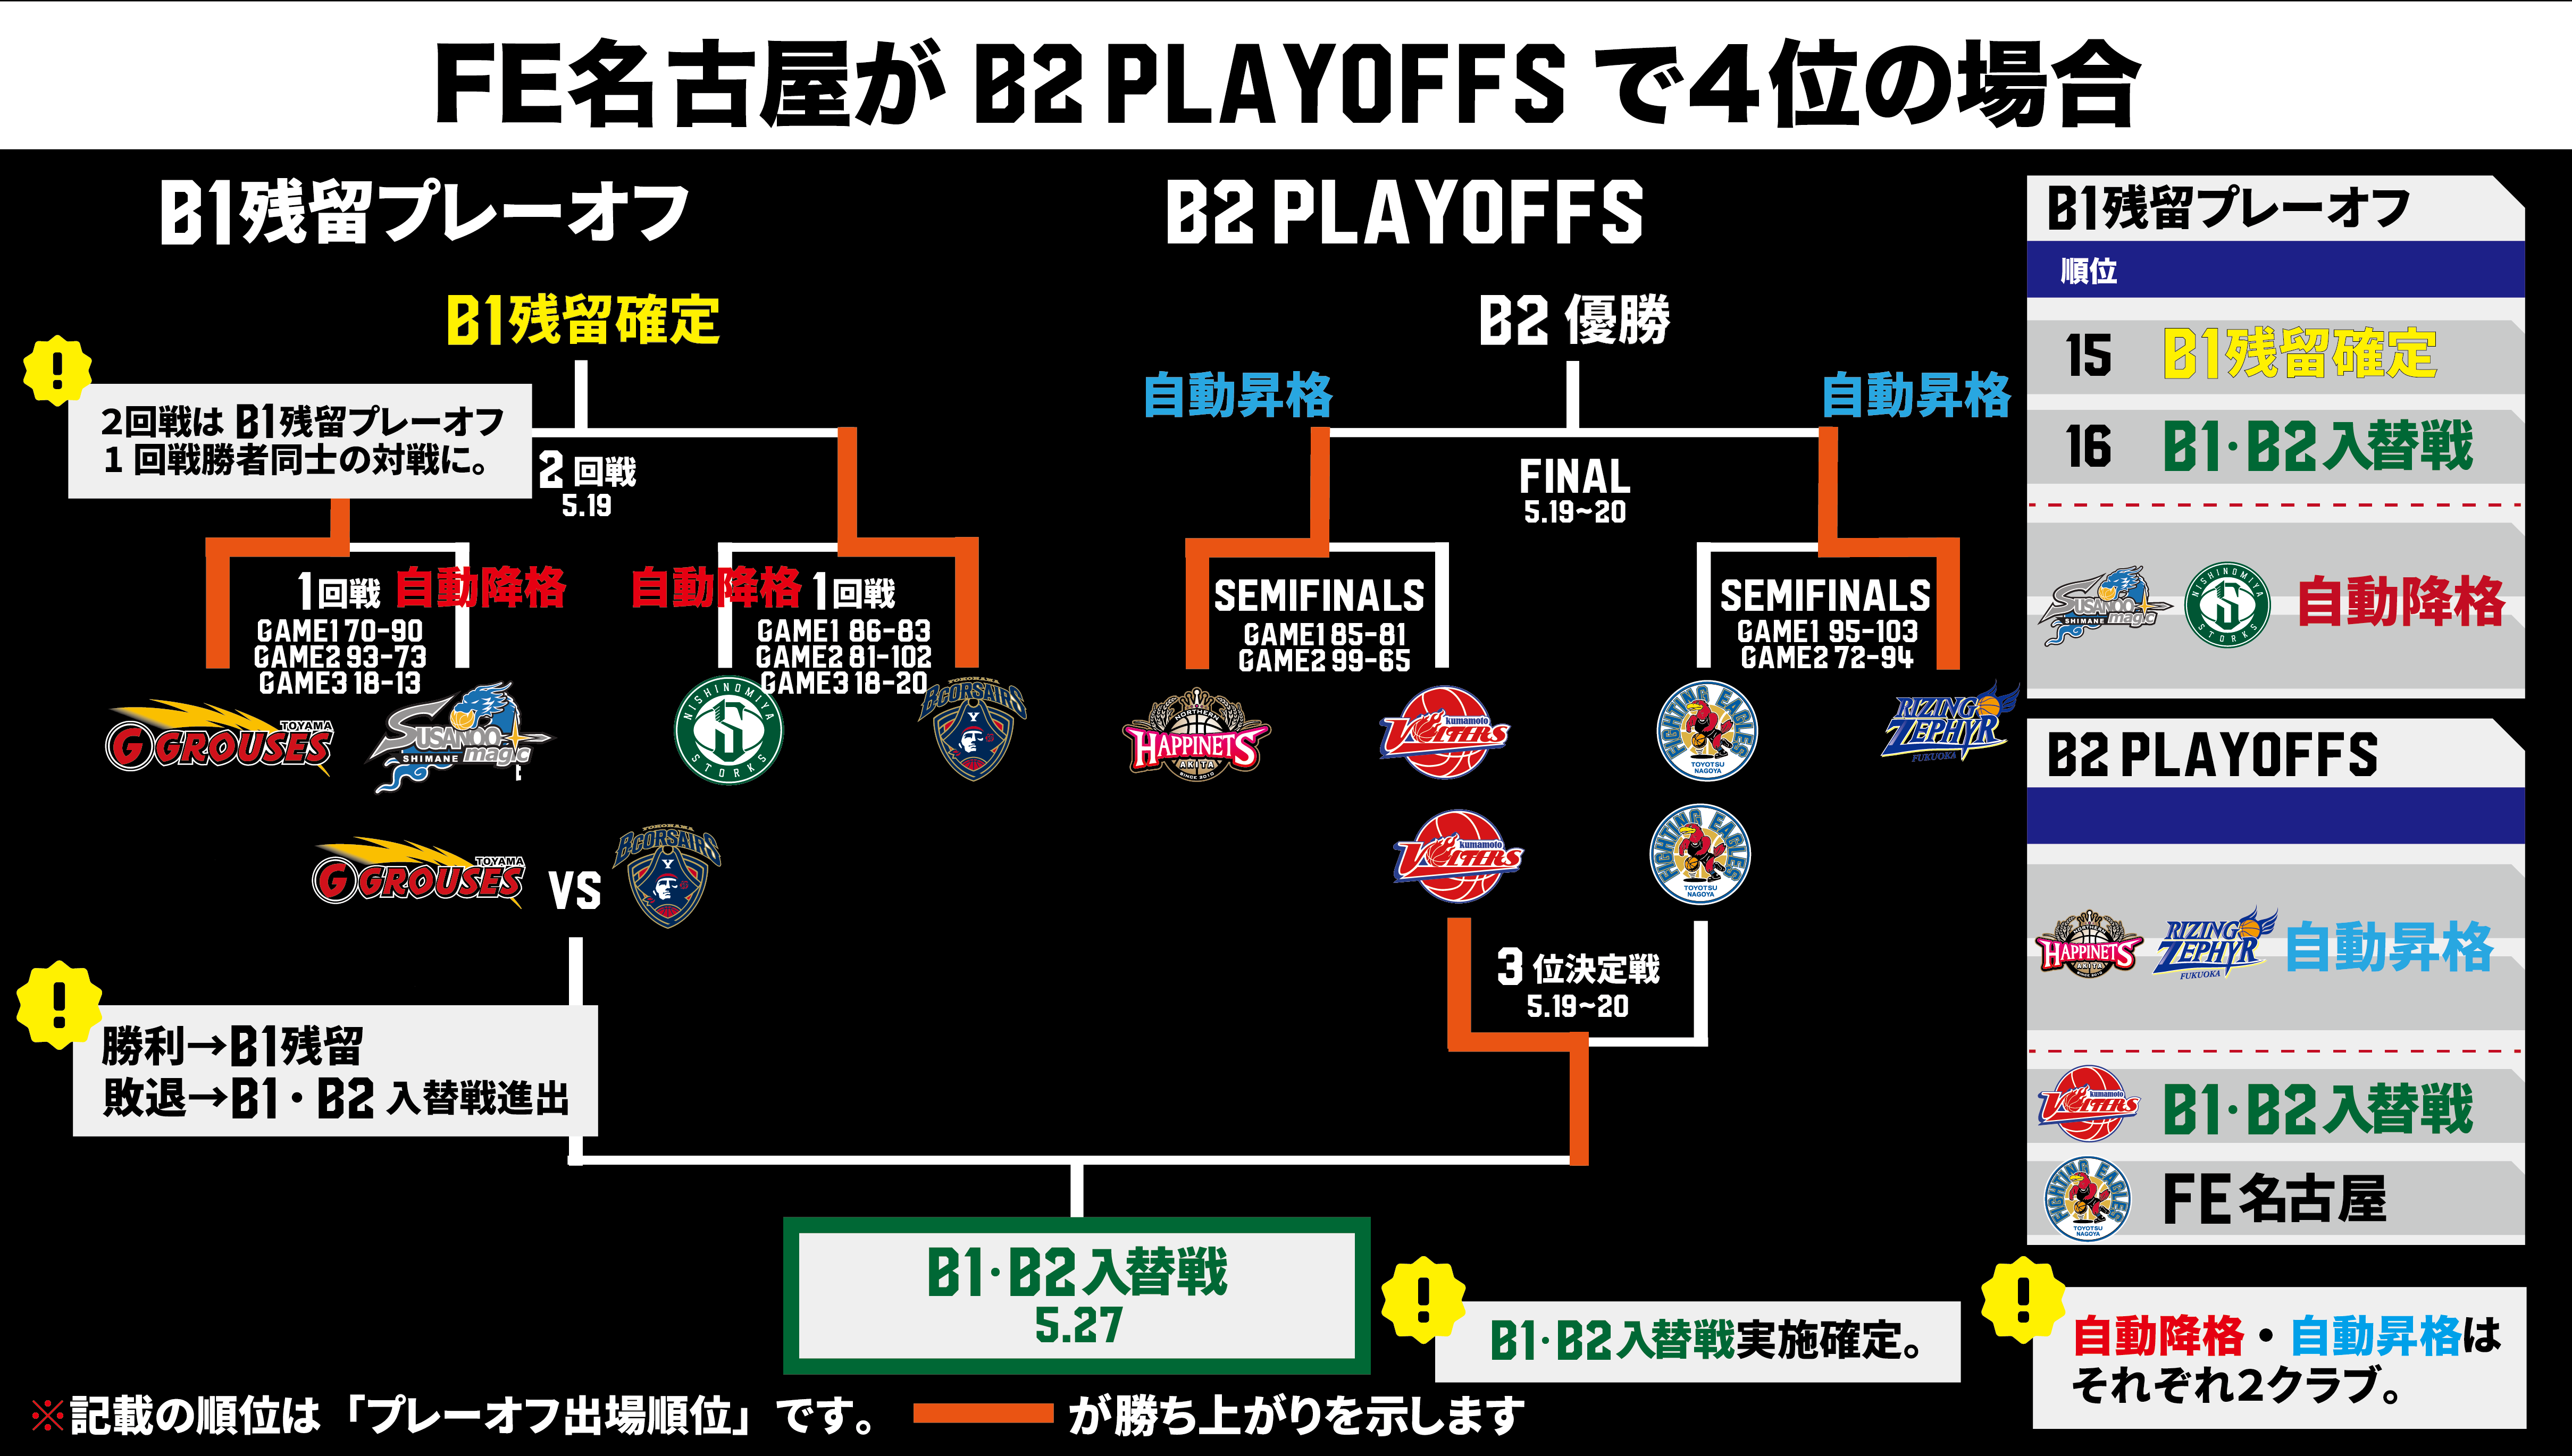 「B1残留プレーオフ 2回戦 2017-18」結果のお知らせ 横浜ビー・コルセアーズの2018-19シーズン B1残留決定！